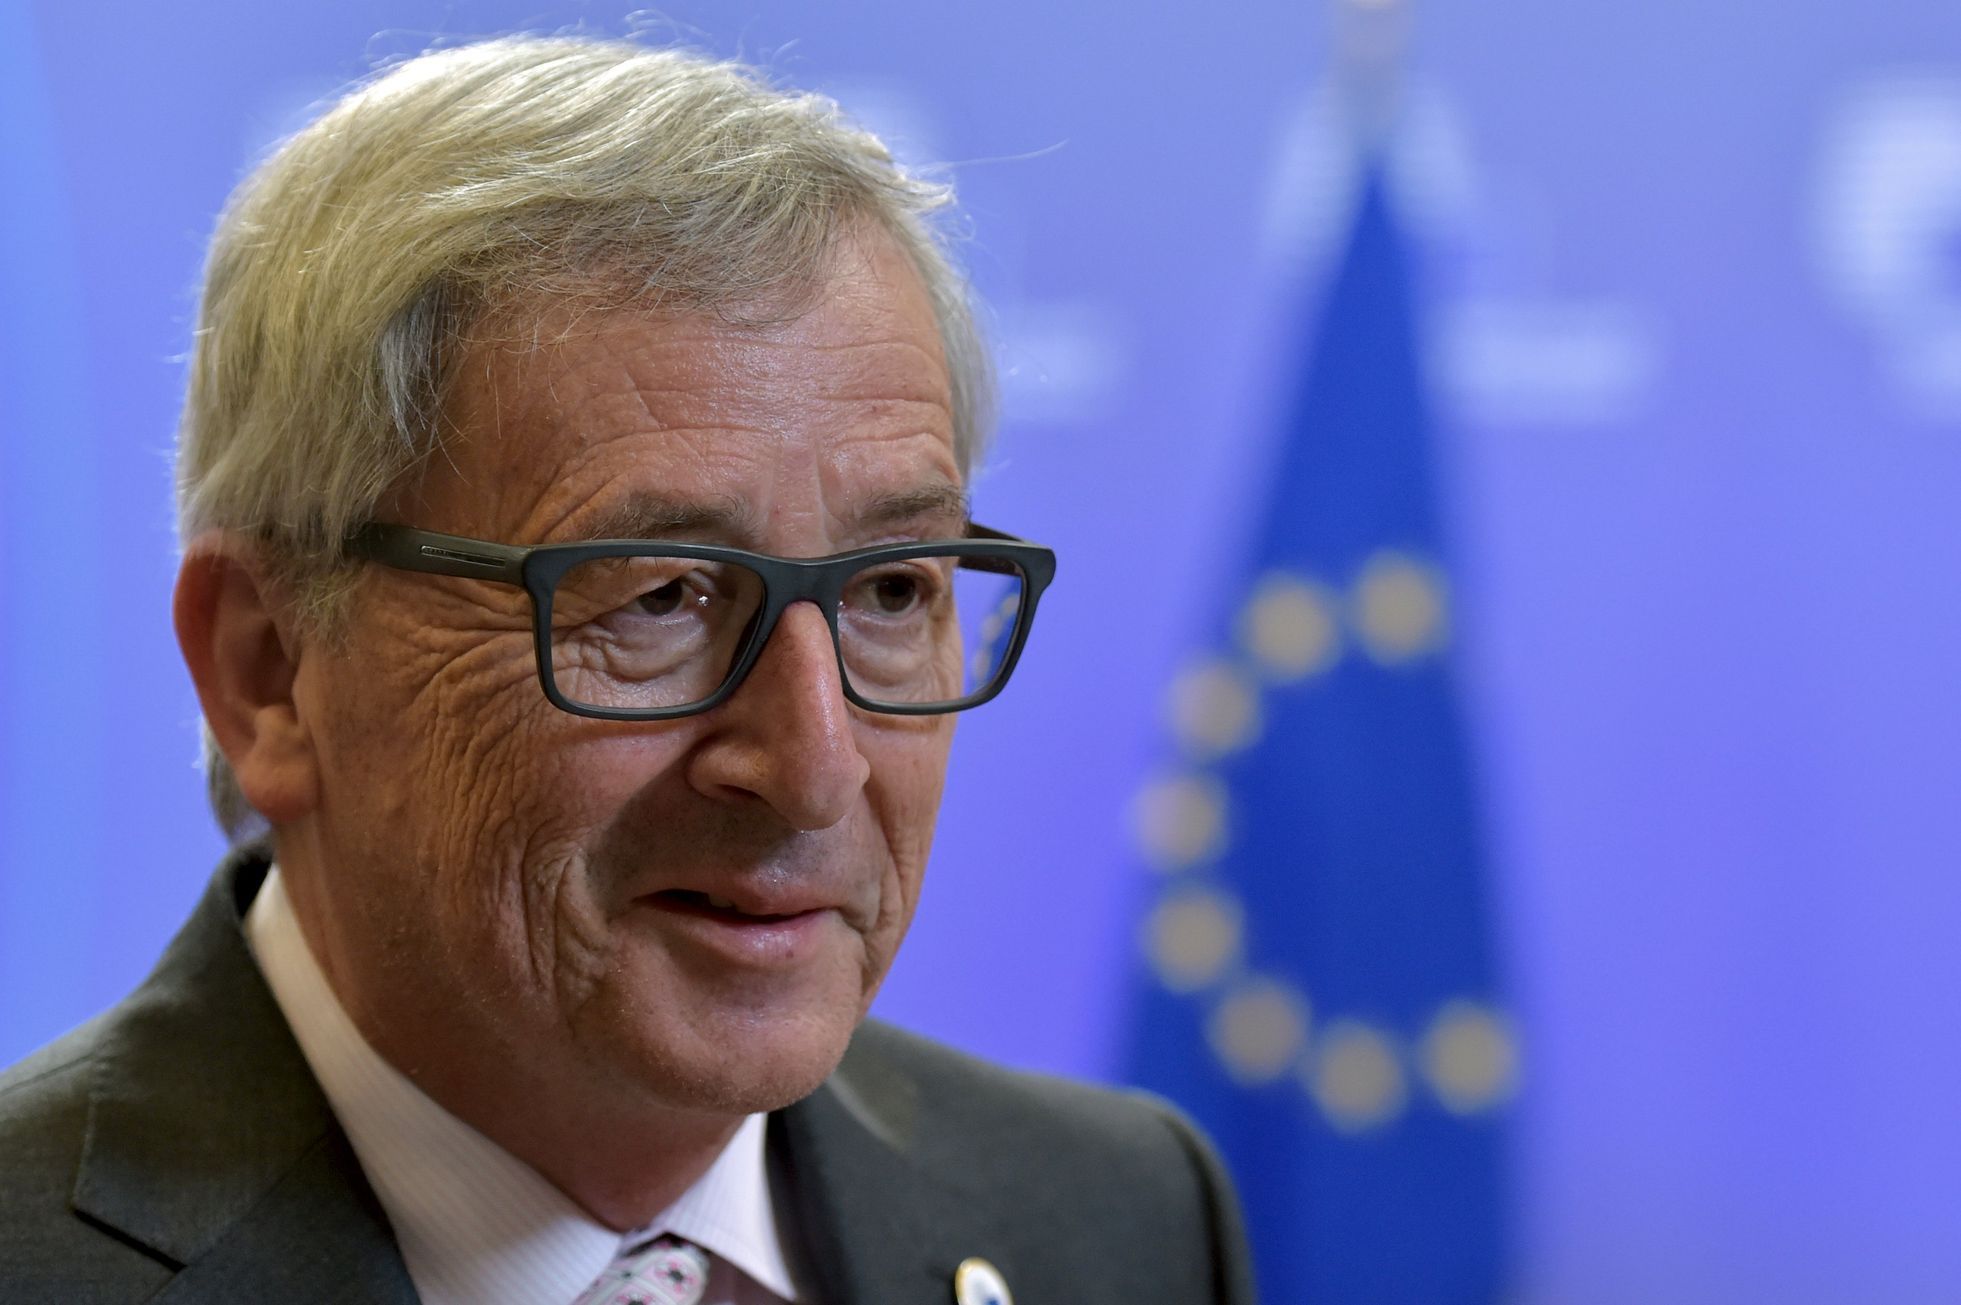 European Commission President Juncker leaves a euro zone leaders summit in Brussels, Belgium